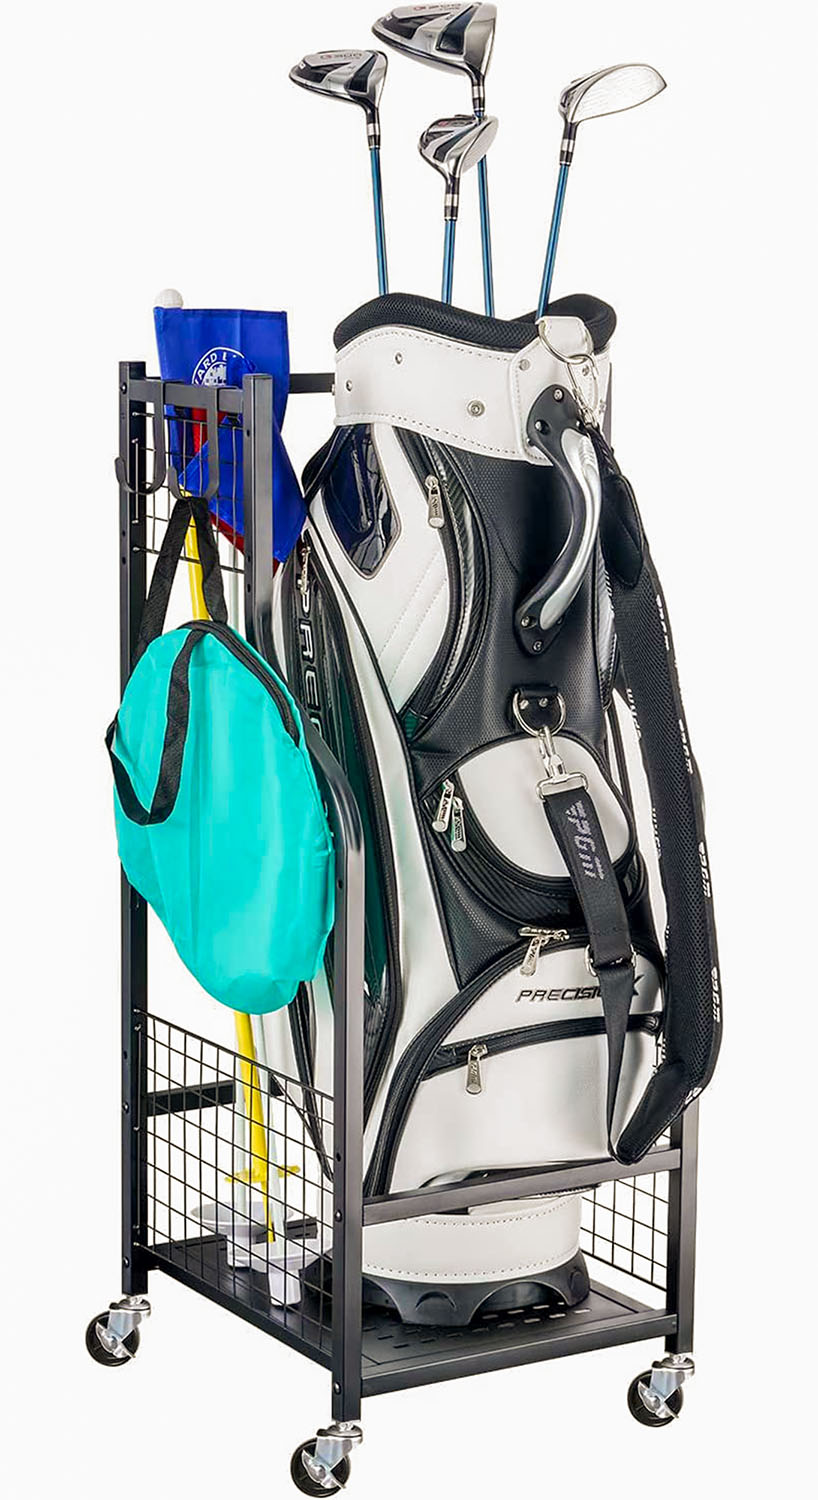 The best single golf bag storage organizer